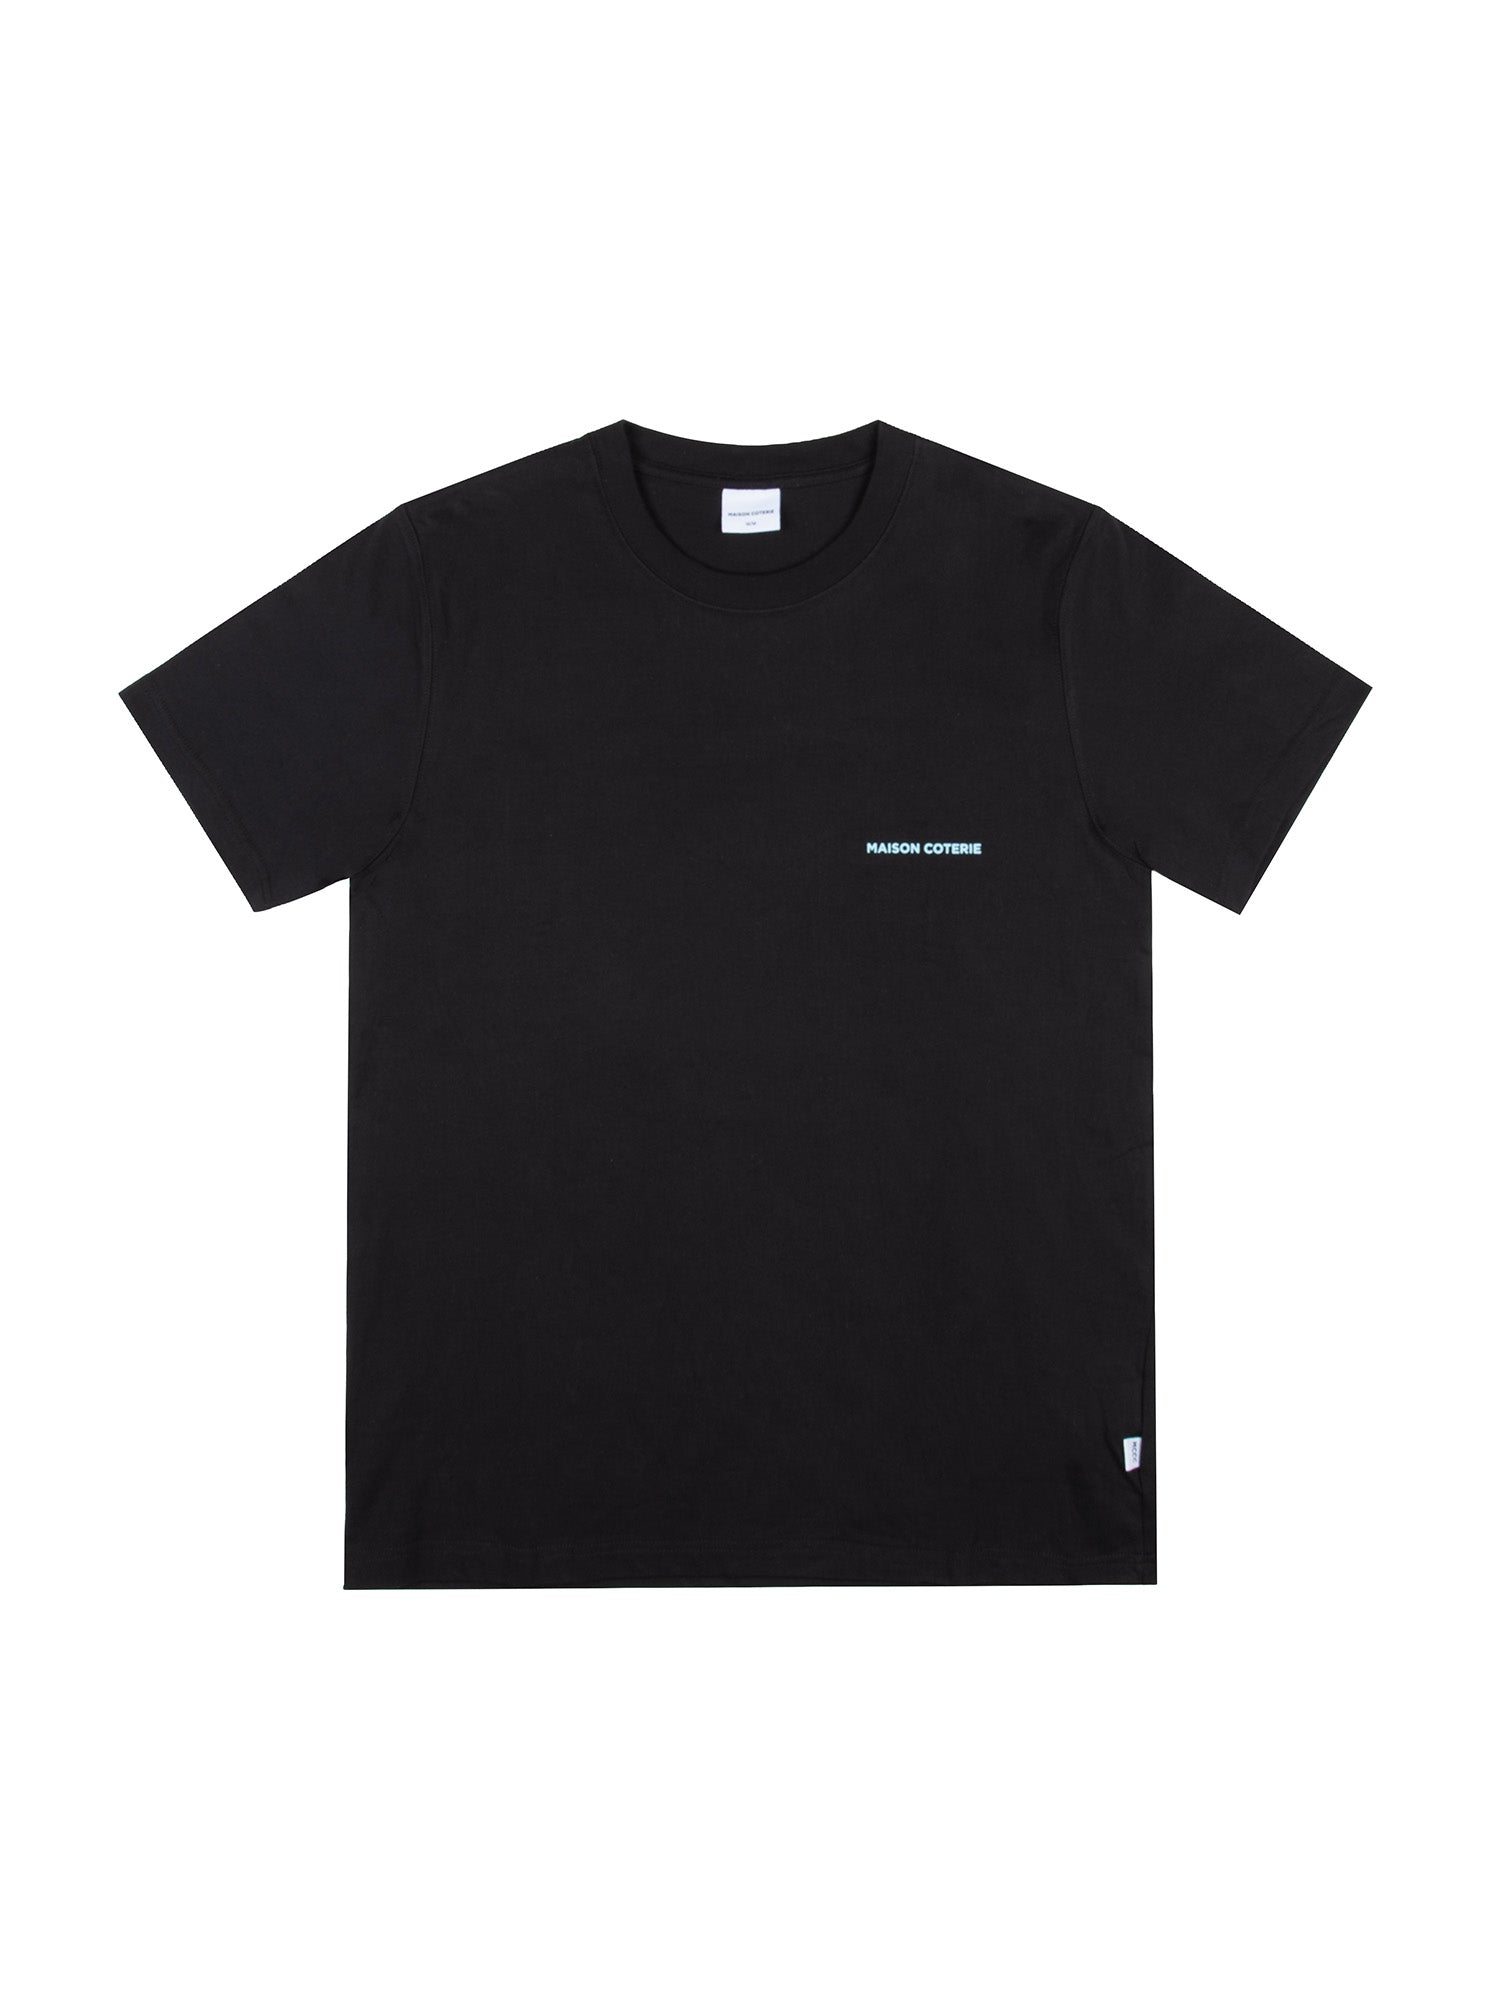 Asher - Graphic T-Shirt - Black